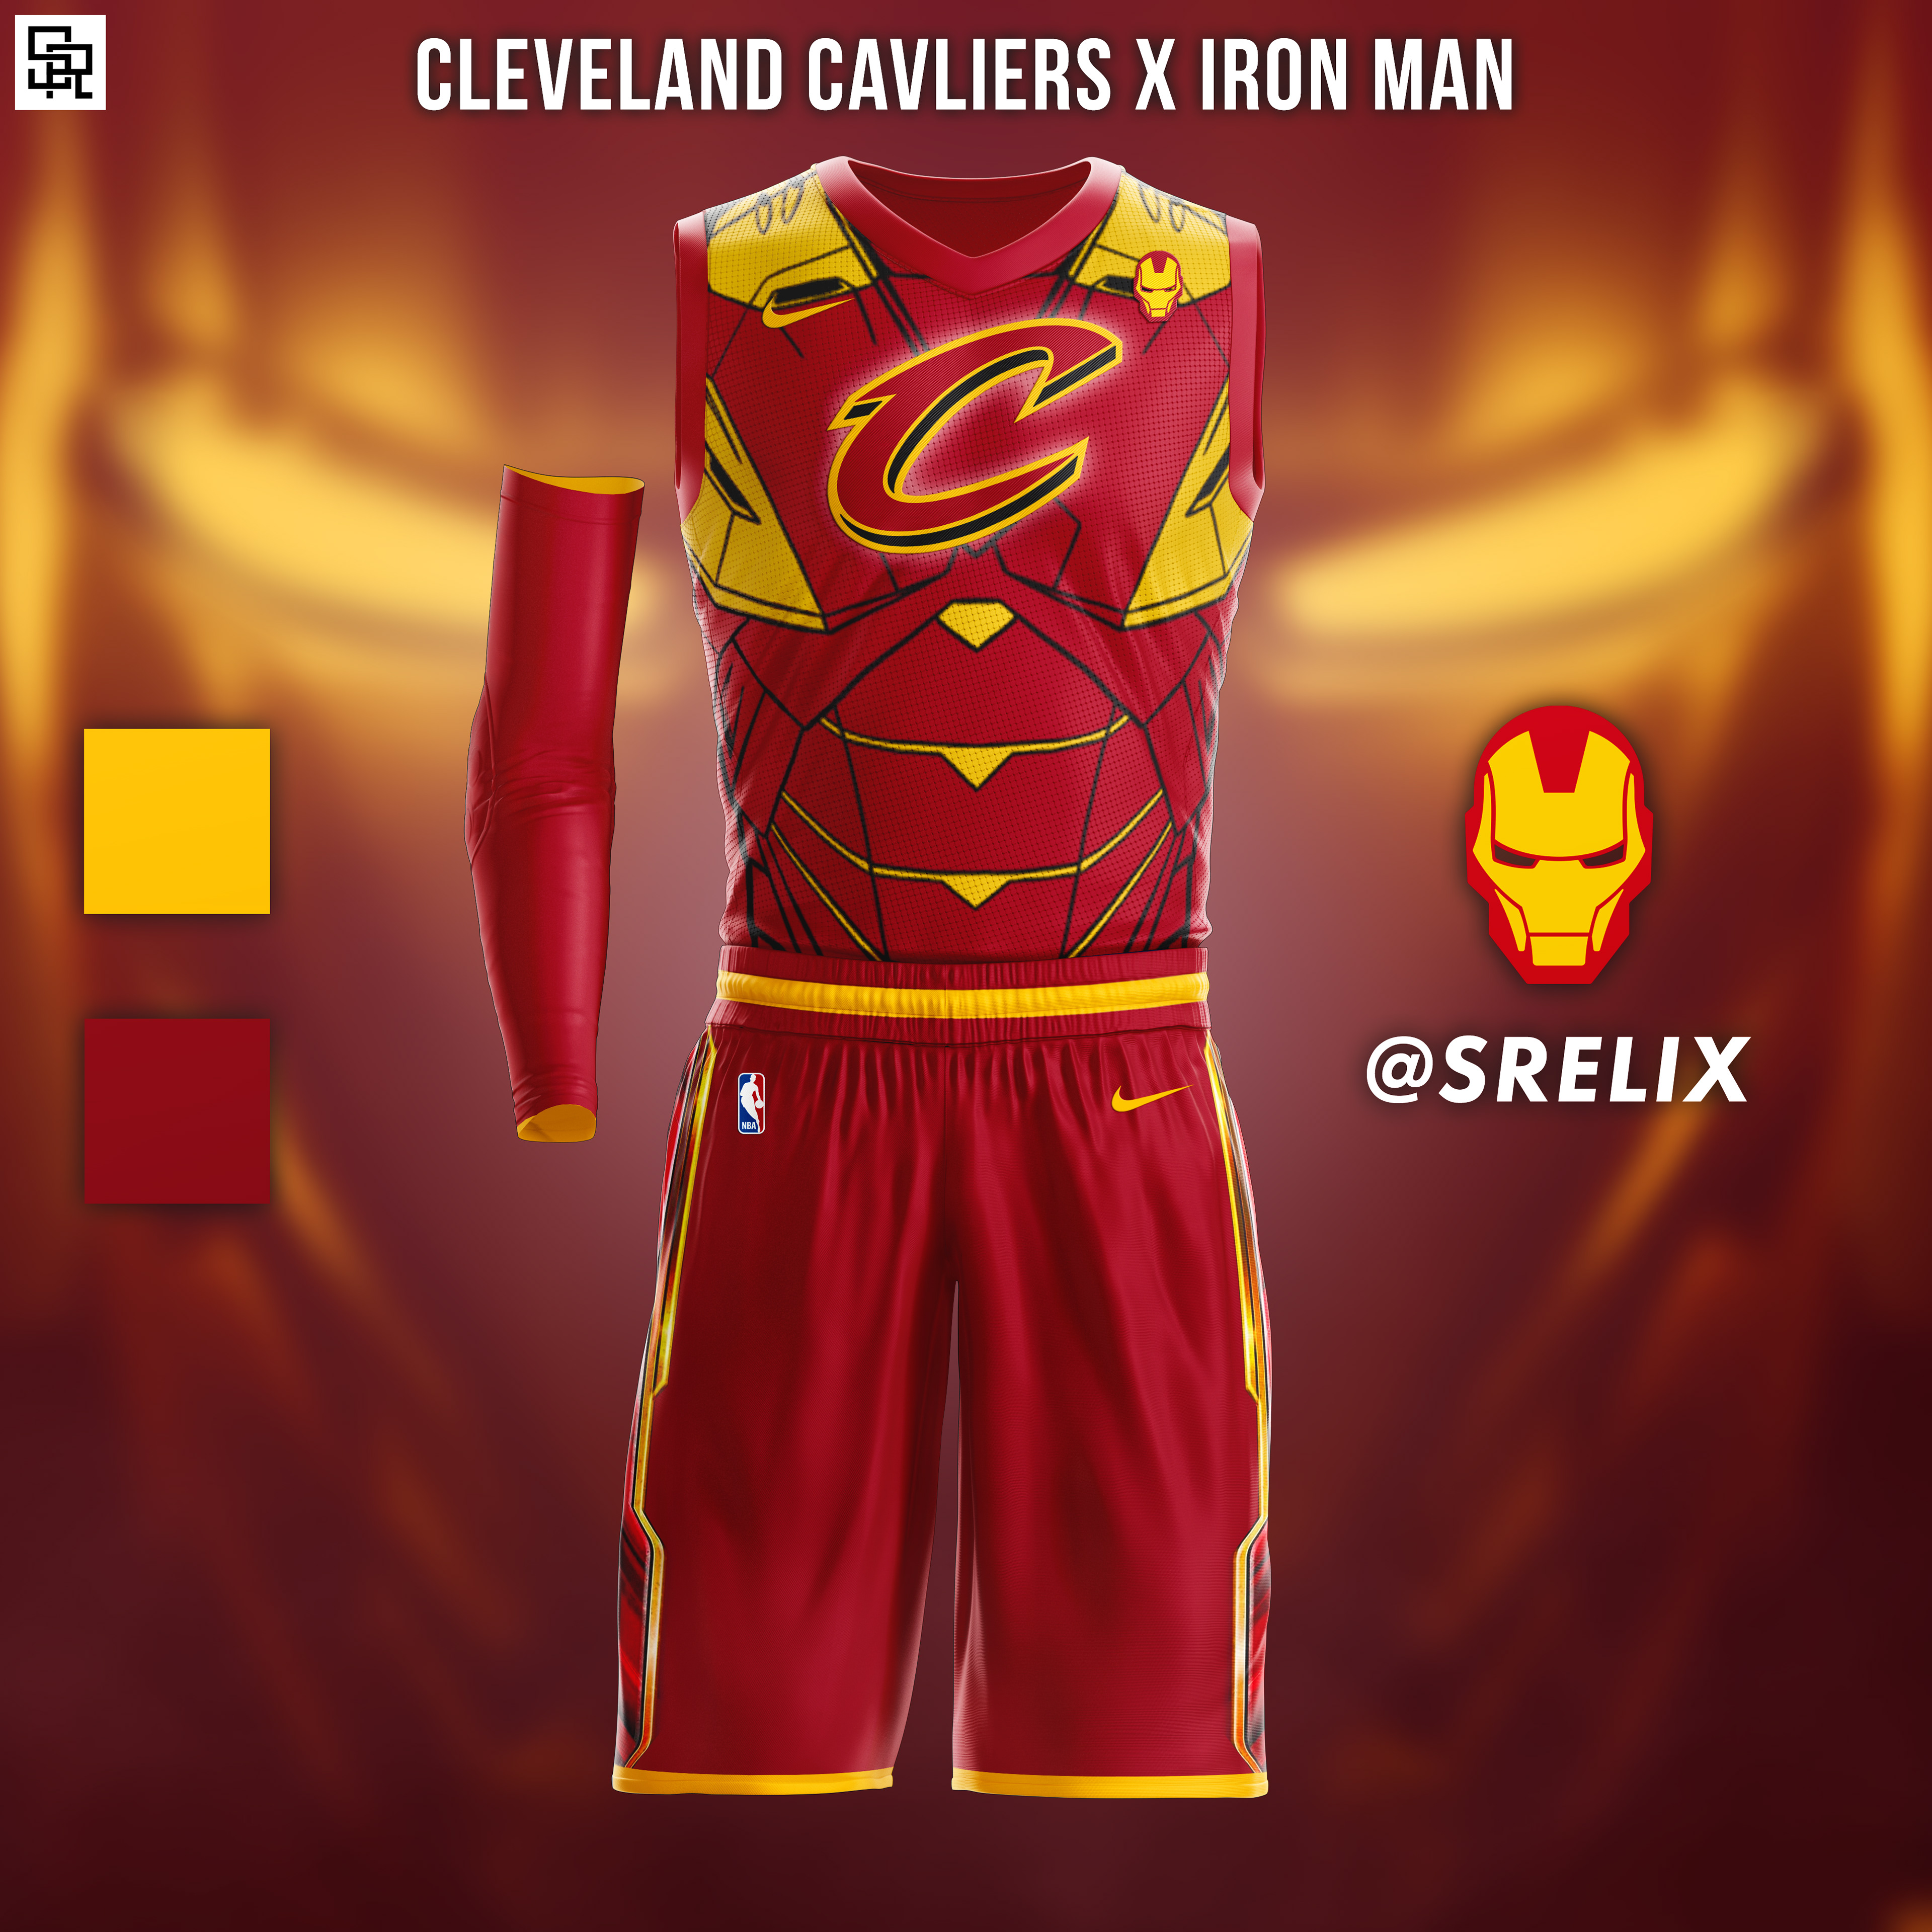 NBA X SOCCER, jersey concepts